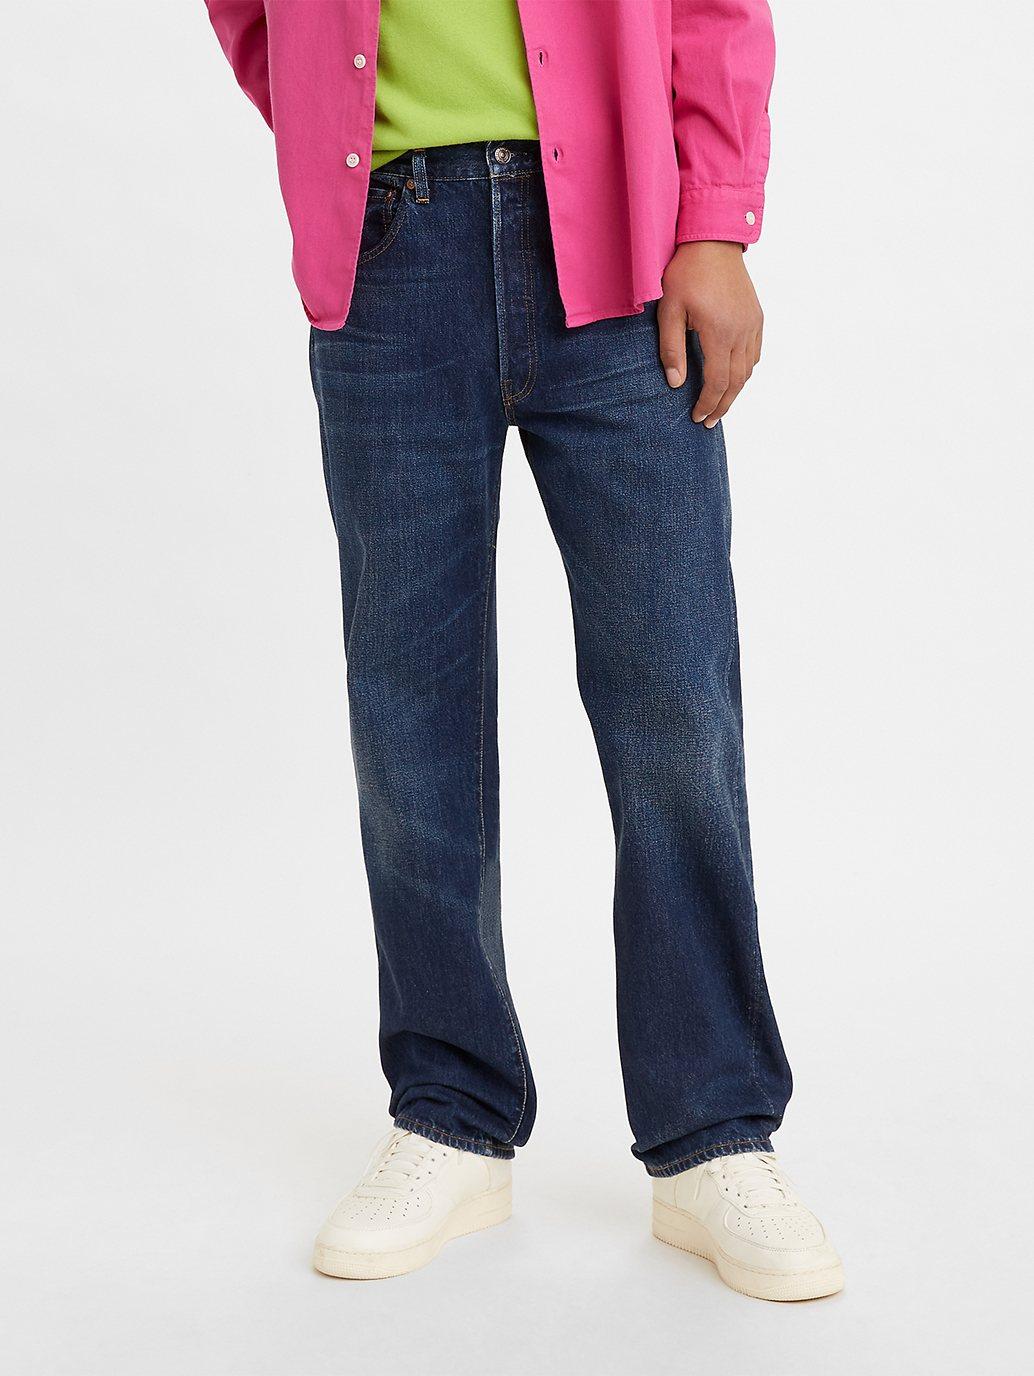 Levi's® MY Vintage Clothing 1955 501® Jeans for Men - 501550064